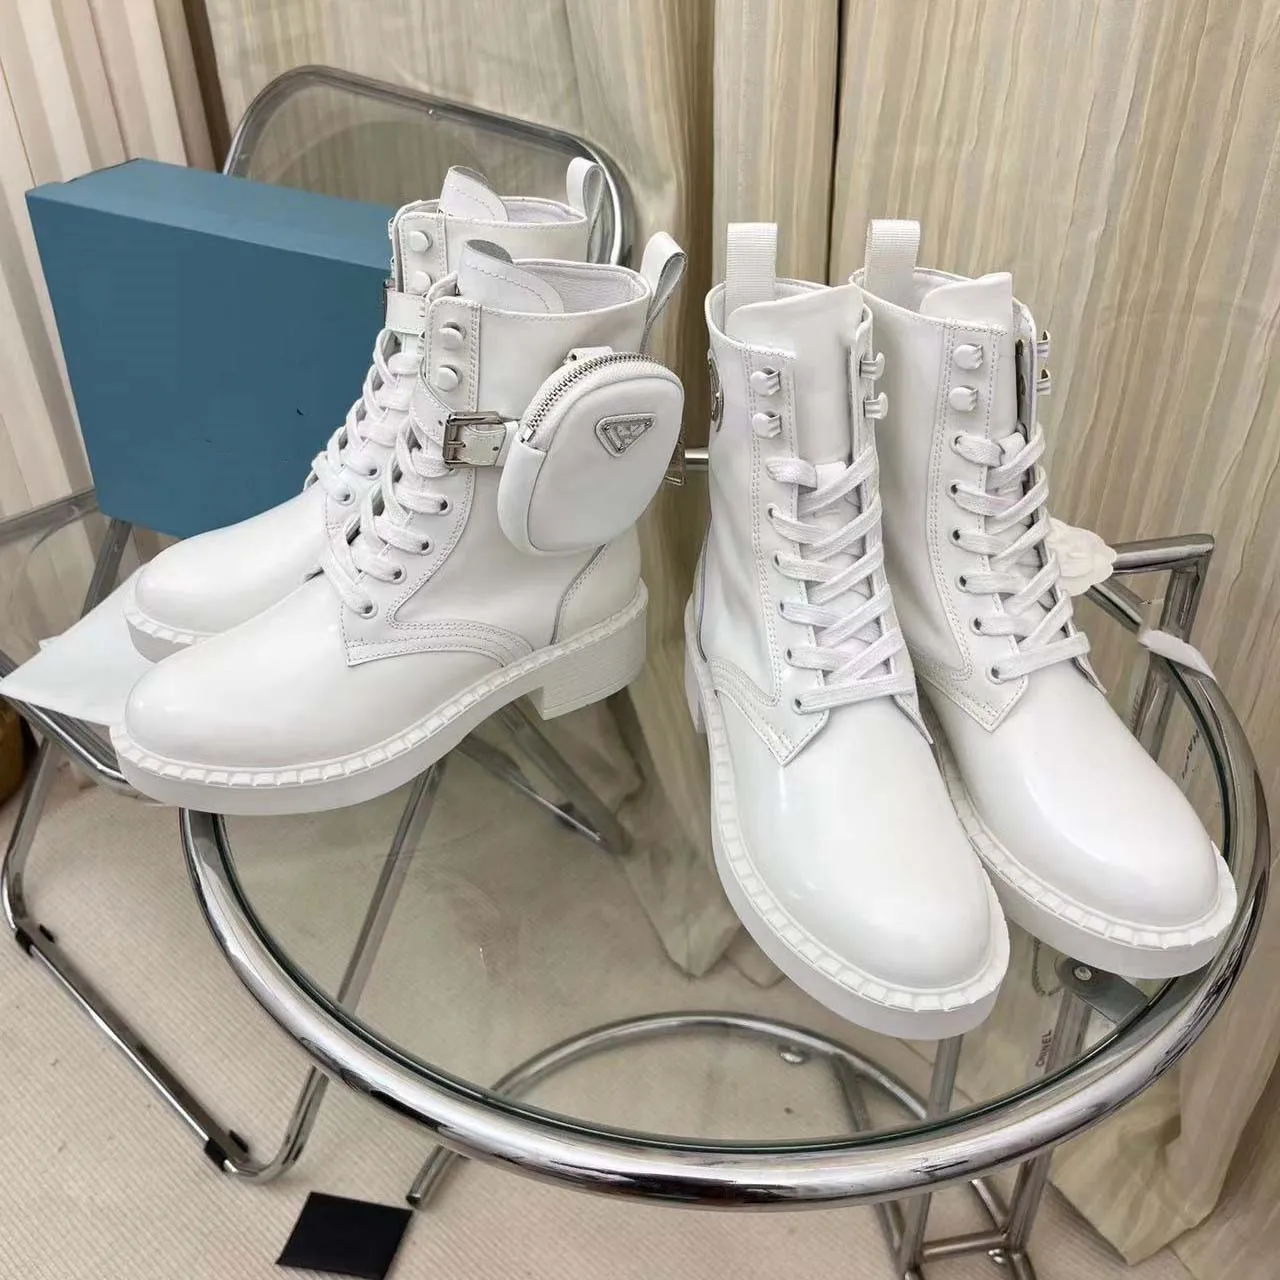 Monolith White Leather Nylon Pouch Pouch Combat Combat Boots Platform أسافين متابعة من الدانتيل جولة إصبع القدم الكعب الكعوب مسطحة مصممة فاخرة مكتنزة للنساء أحذية المصنع 04